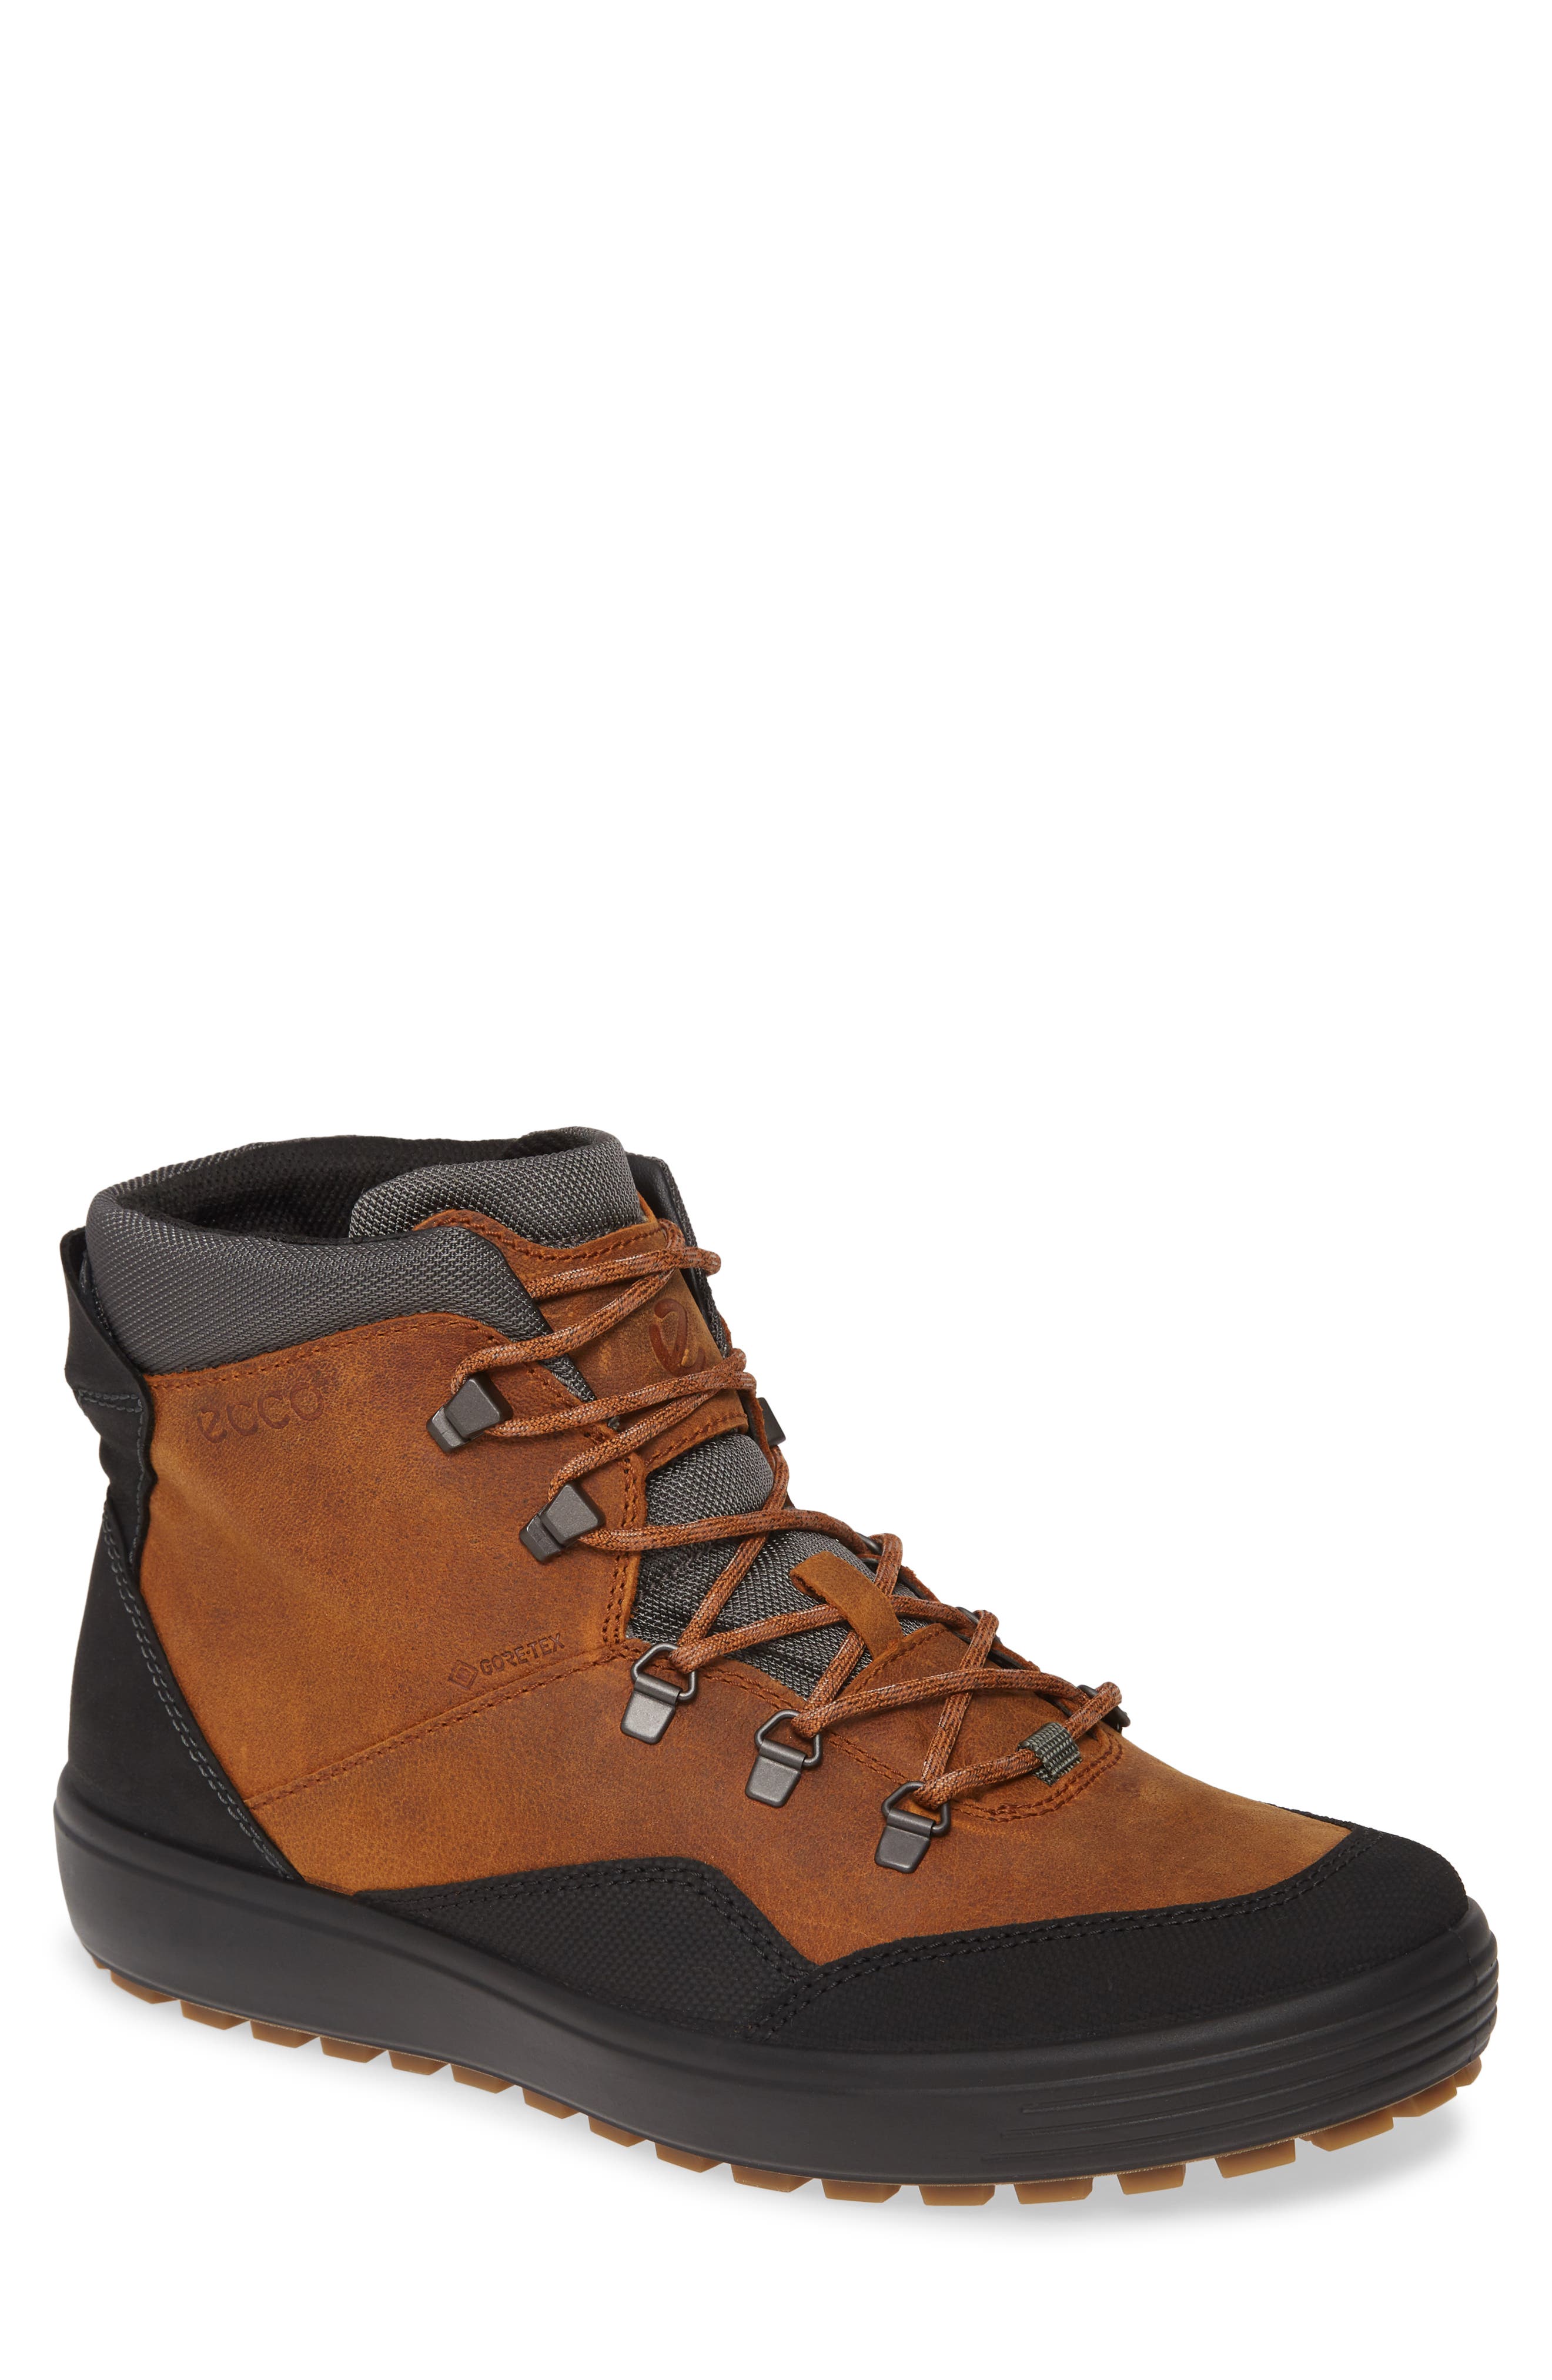 UPC 825840089936 product image for Men's Ecco Soft 7 Tred Terrain High Sneaker, Size 11-11.5US / 45EU - Brown | upcitemdb.com